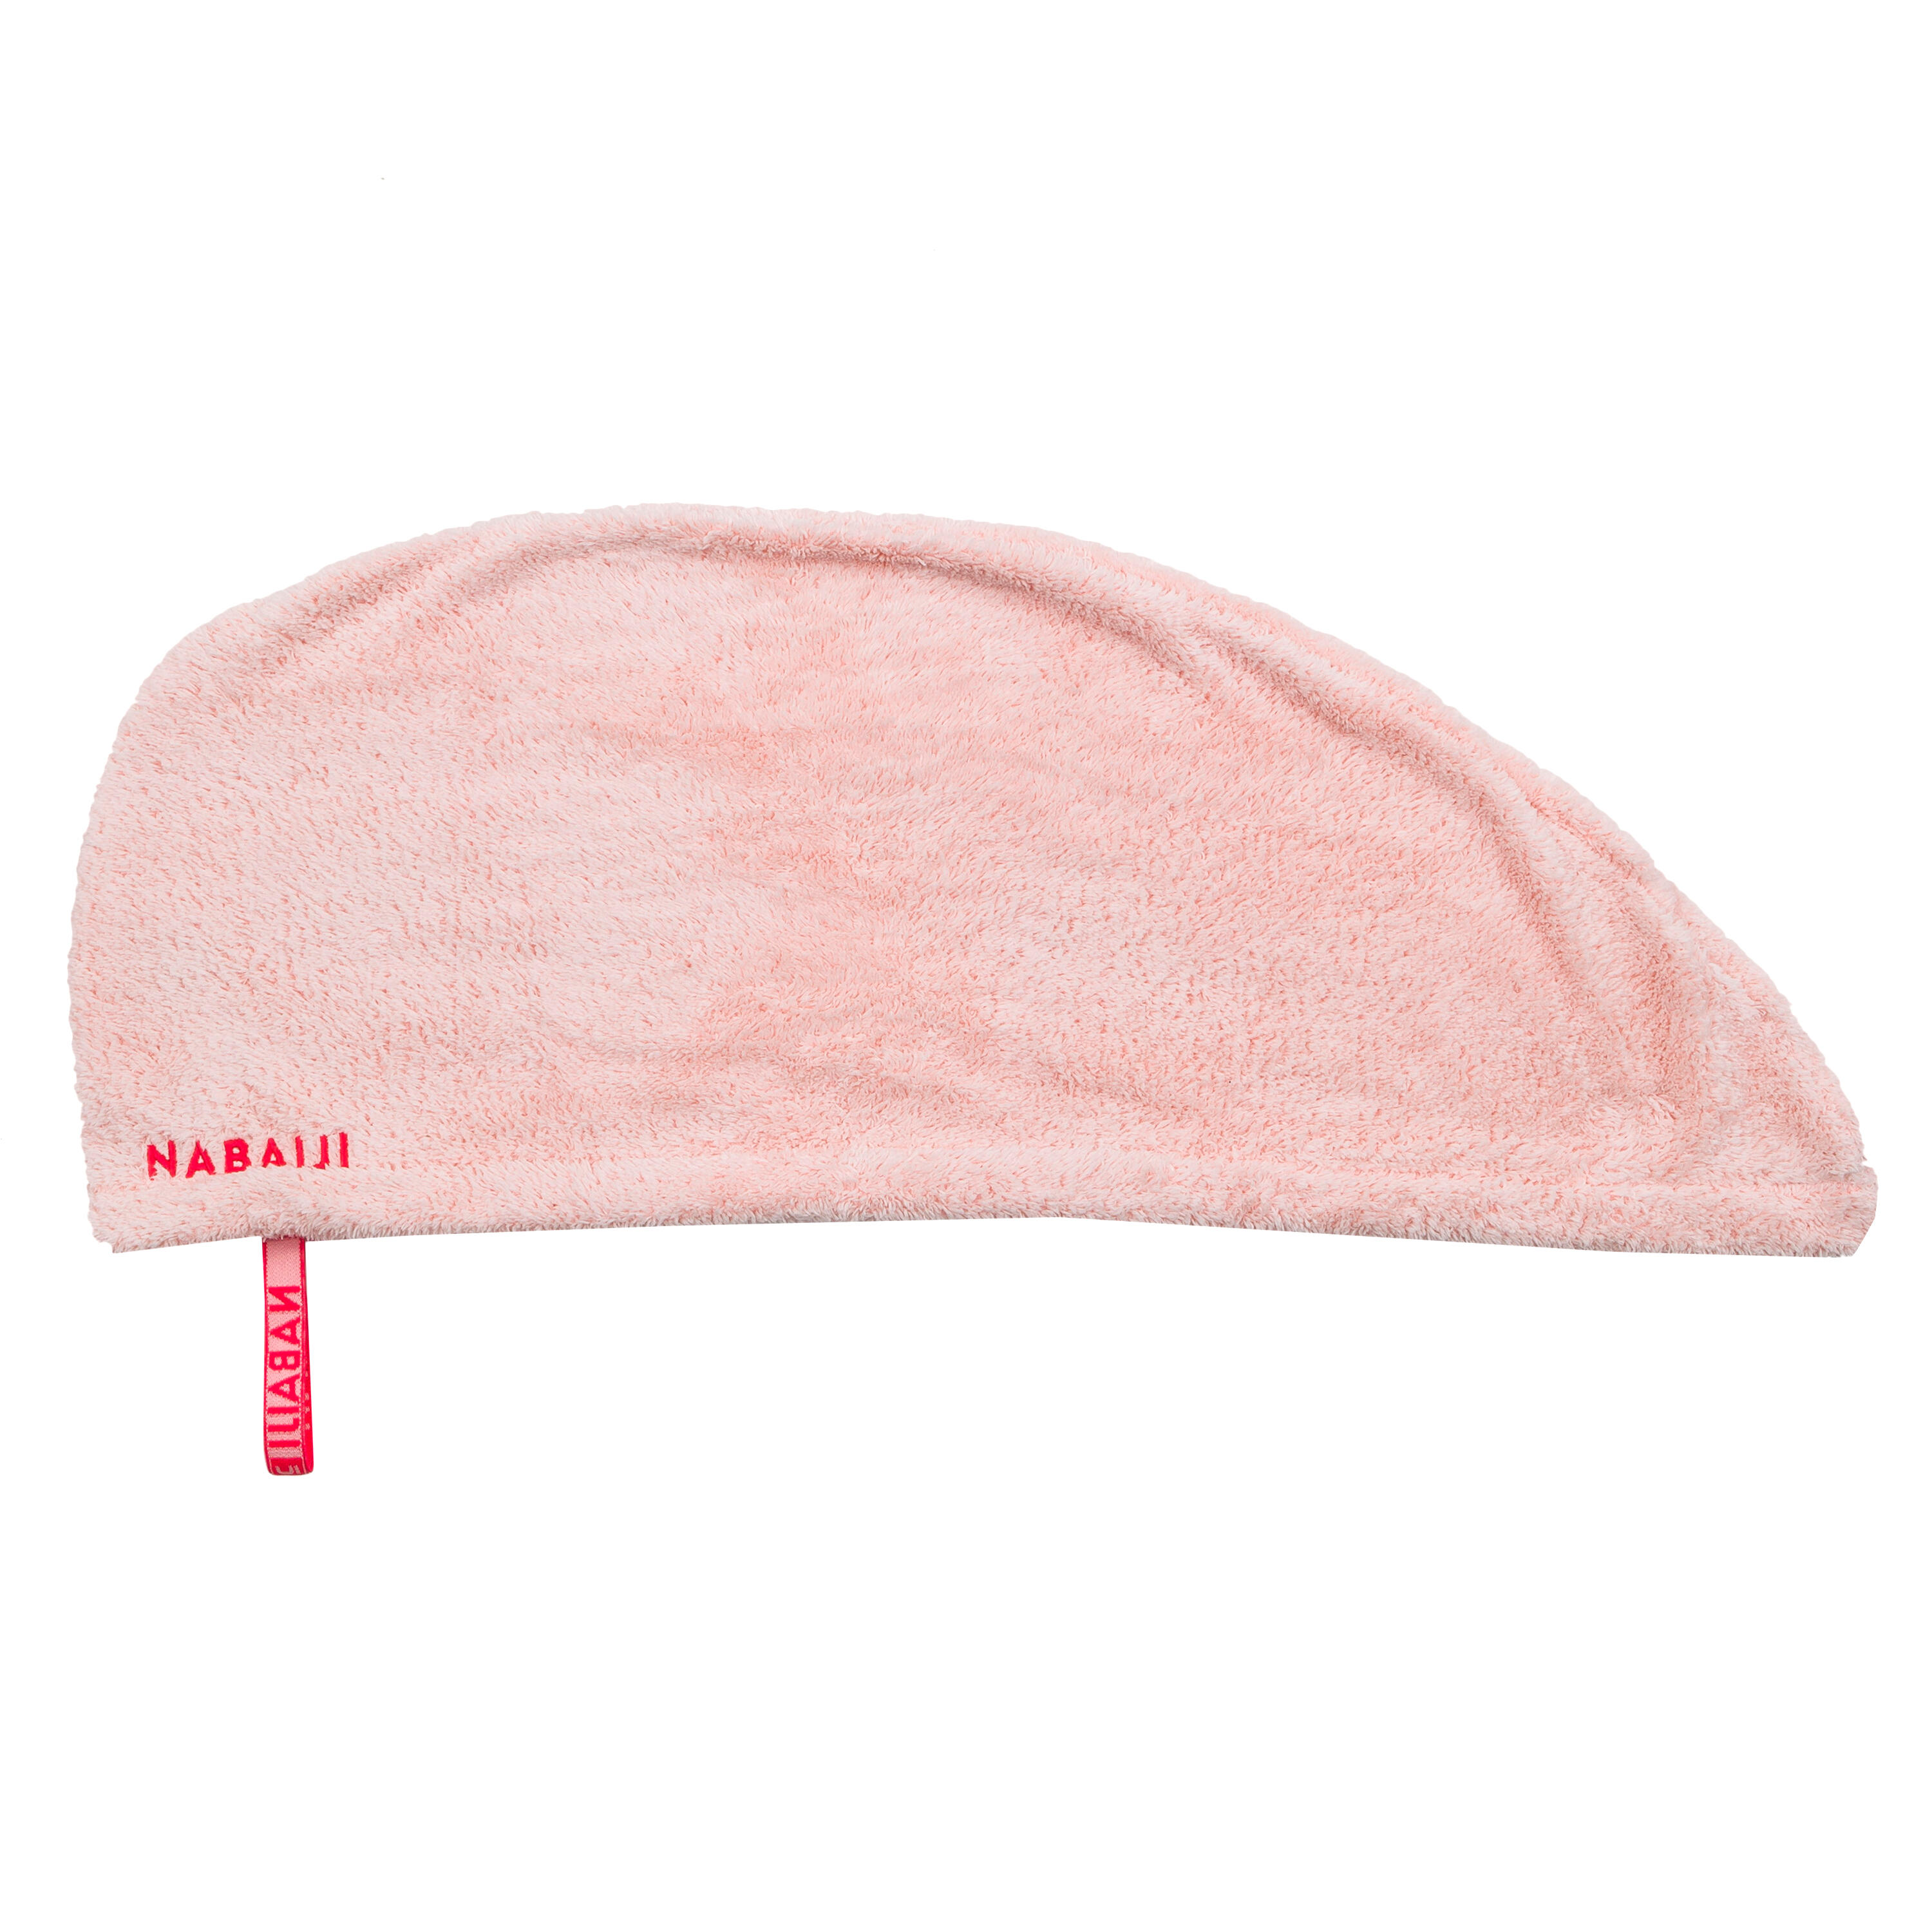 Swimming Soft Microfibre Hair Towel - Light Pink 6/7